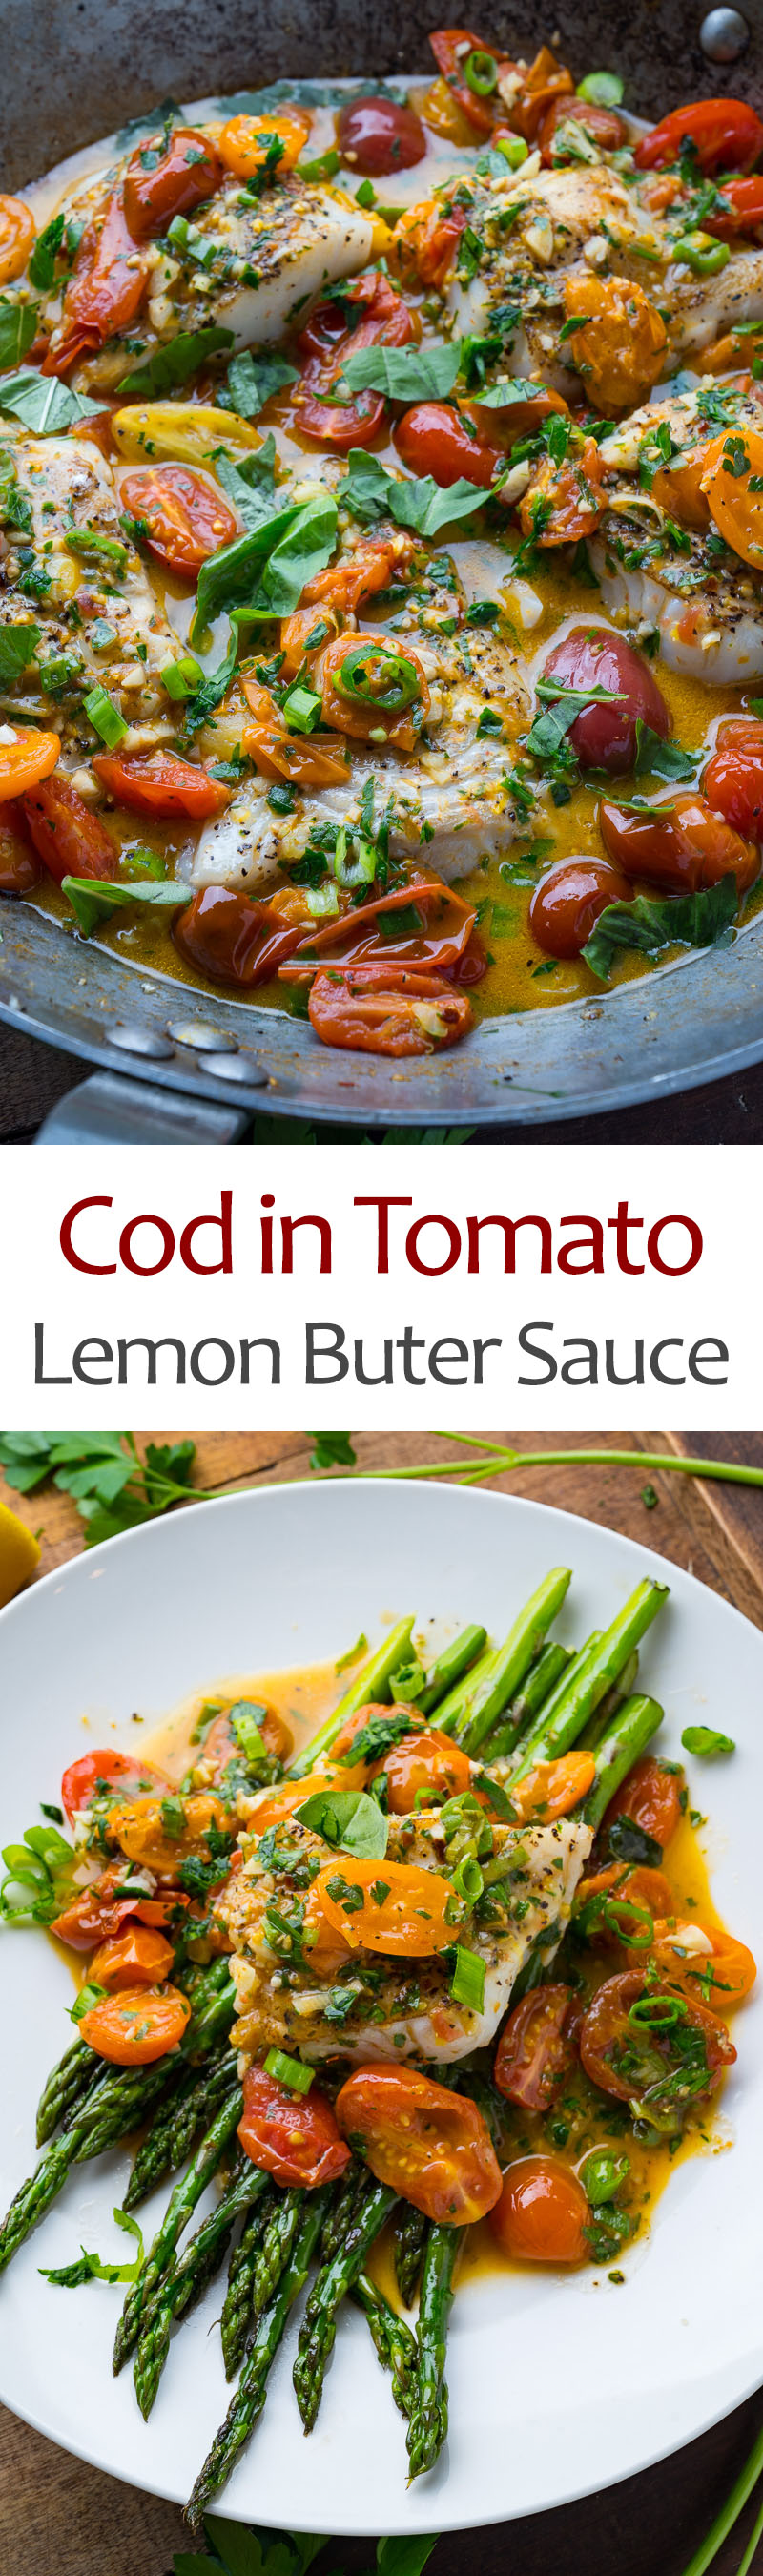 Cod in a Tomato Lemon Butter Sauce